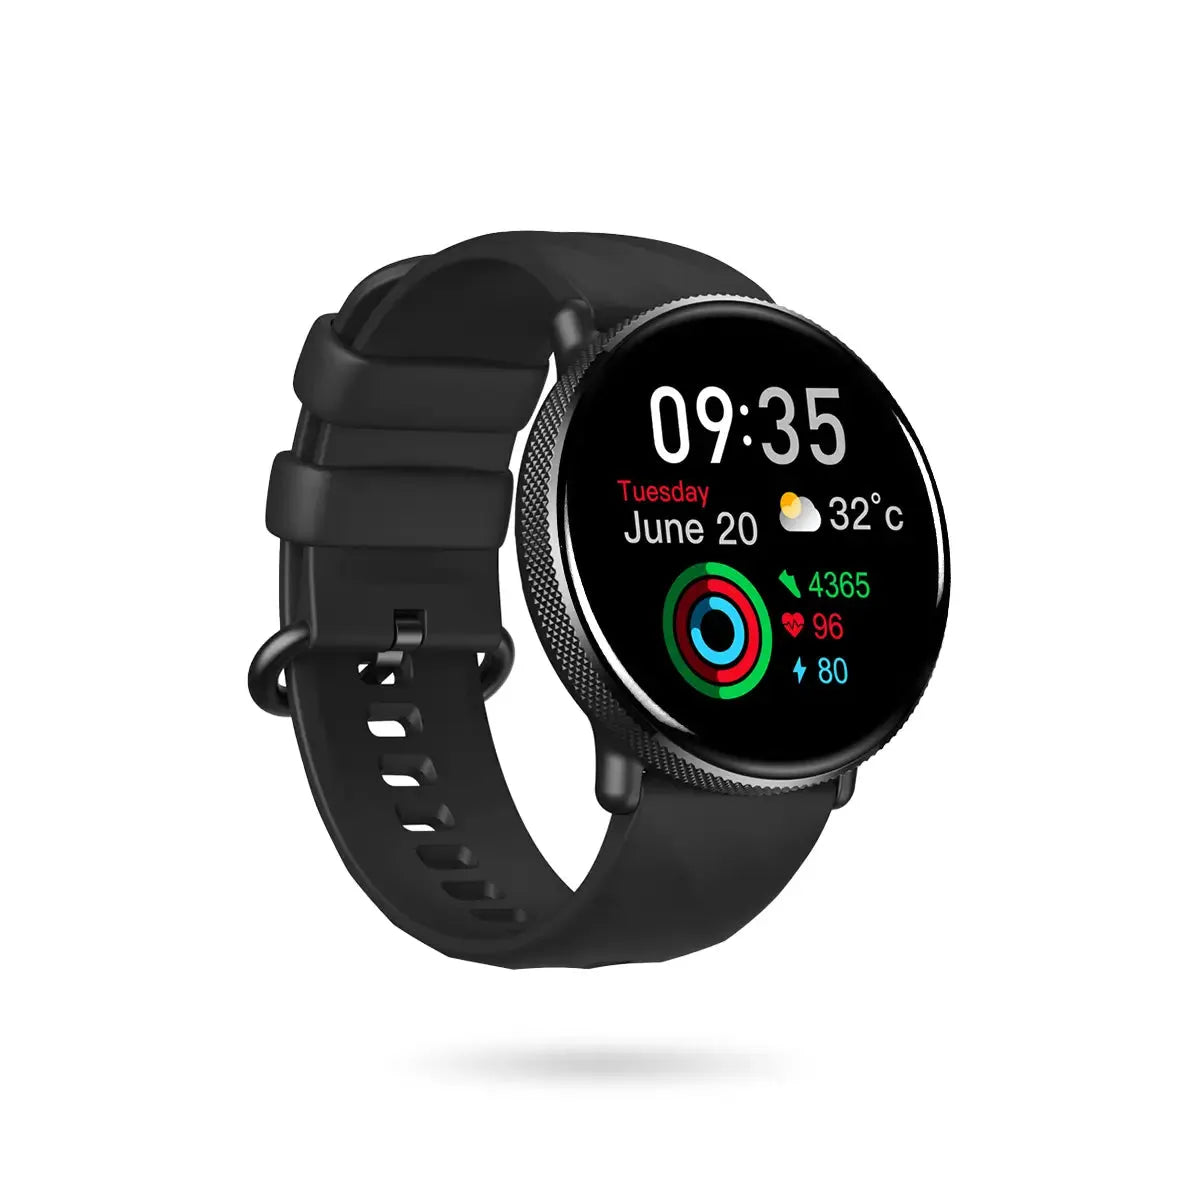 Tousains smartwatch P2 in black